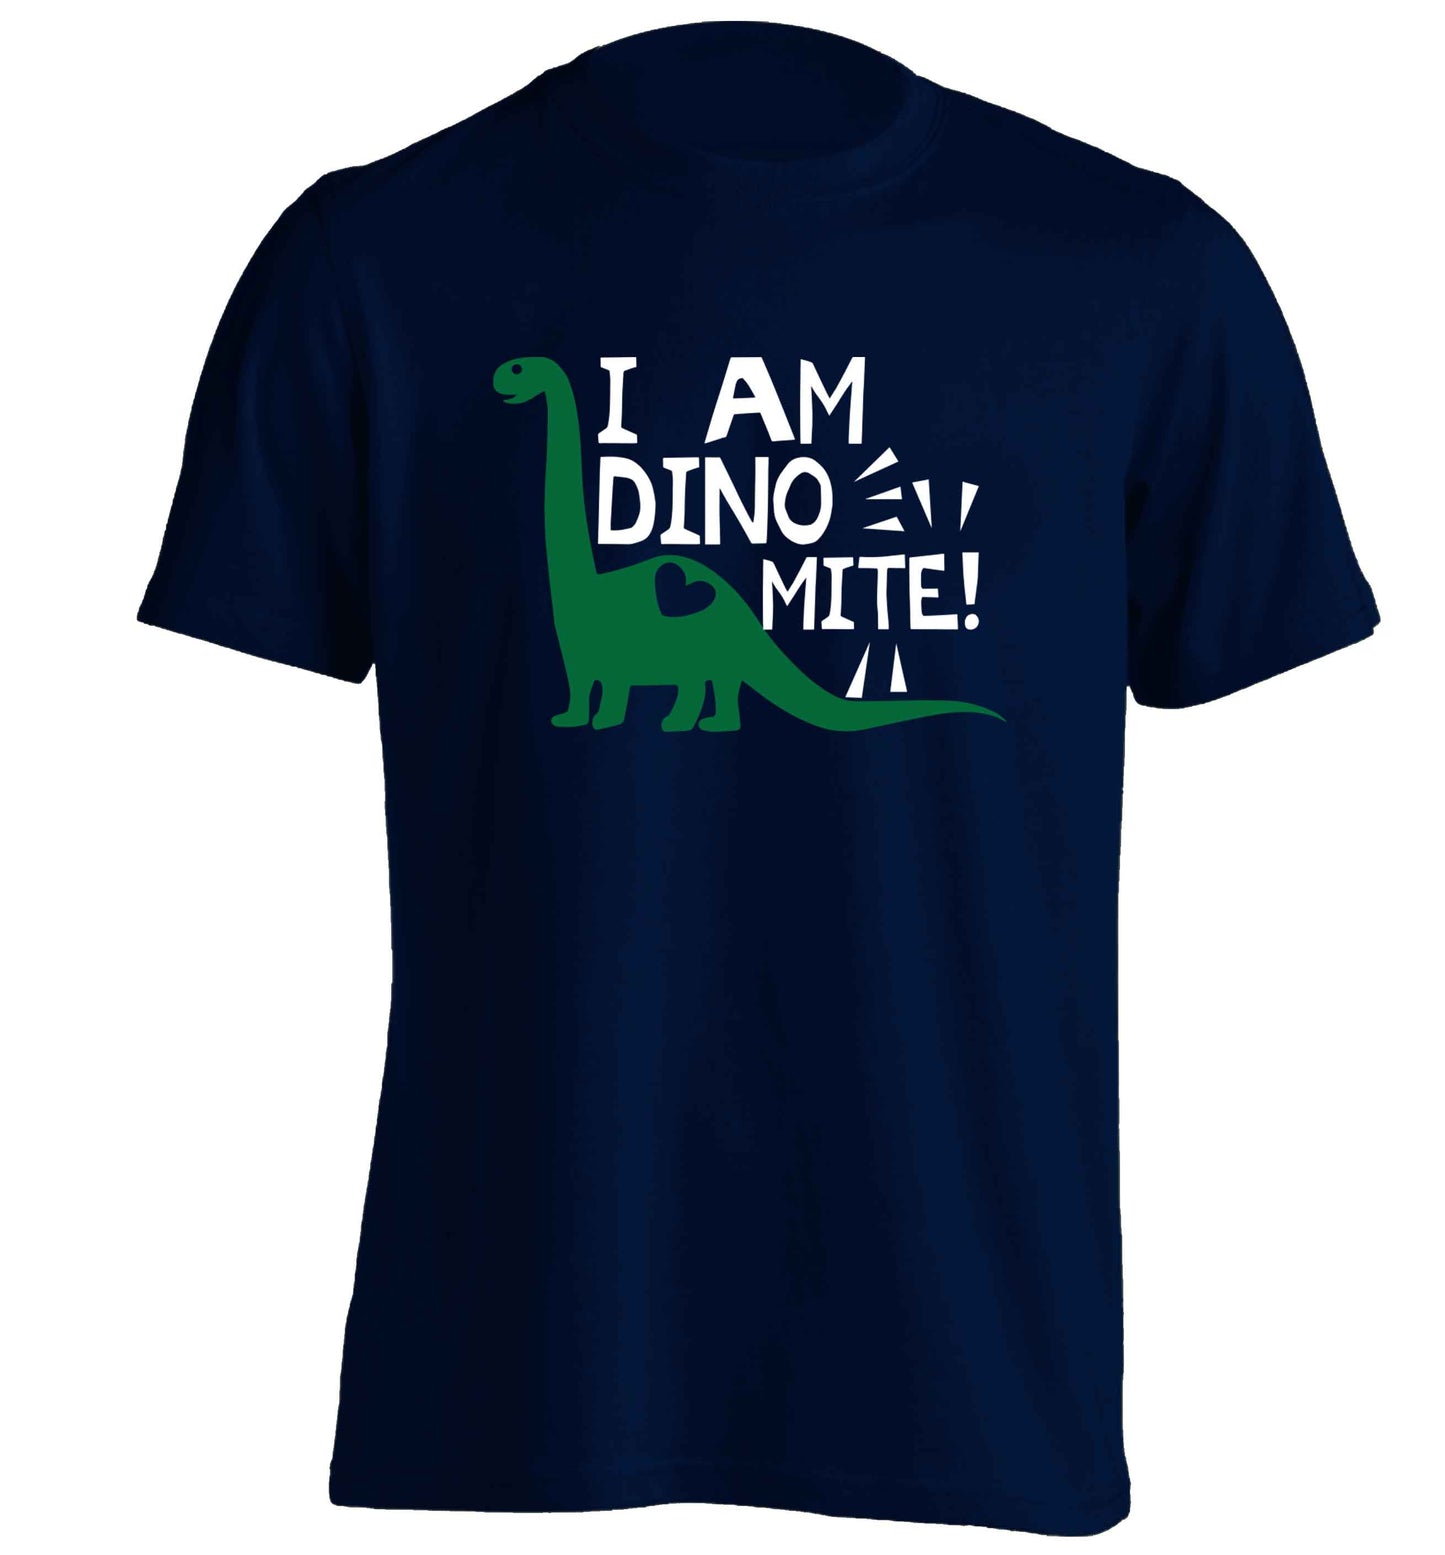 I am dinomite! adults unisex navy Tshirt 2XL